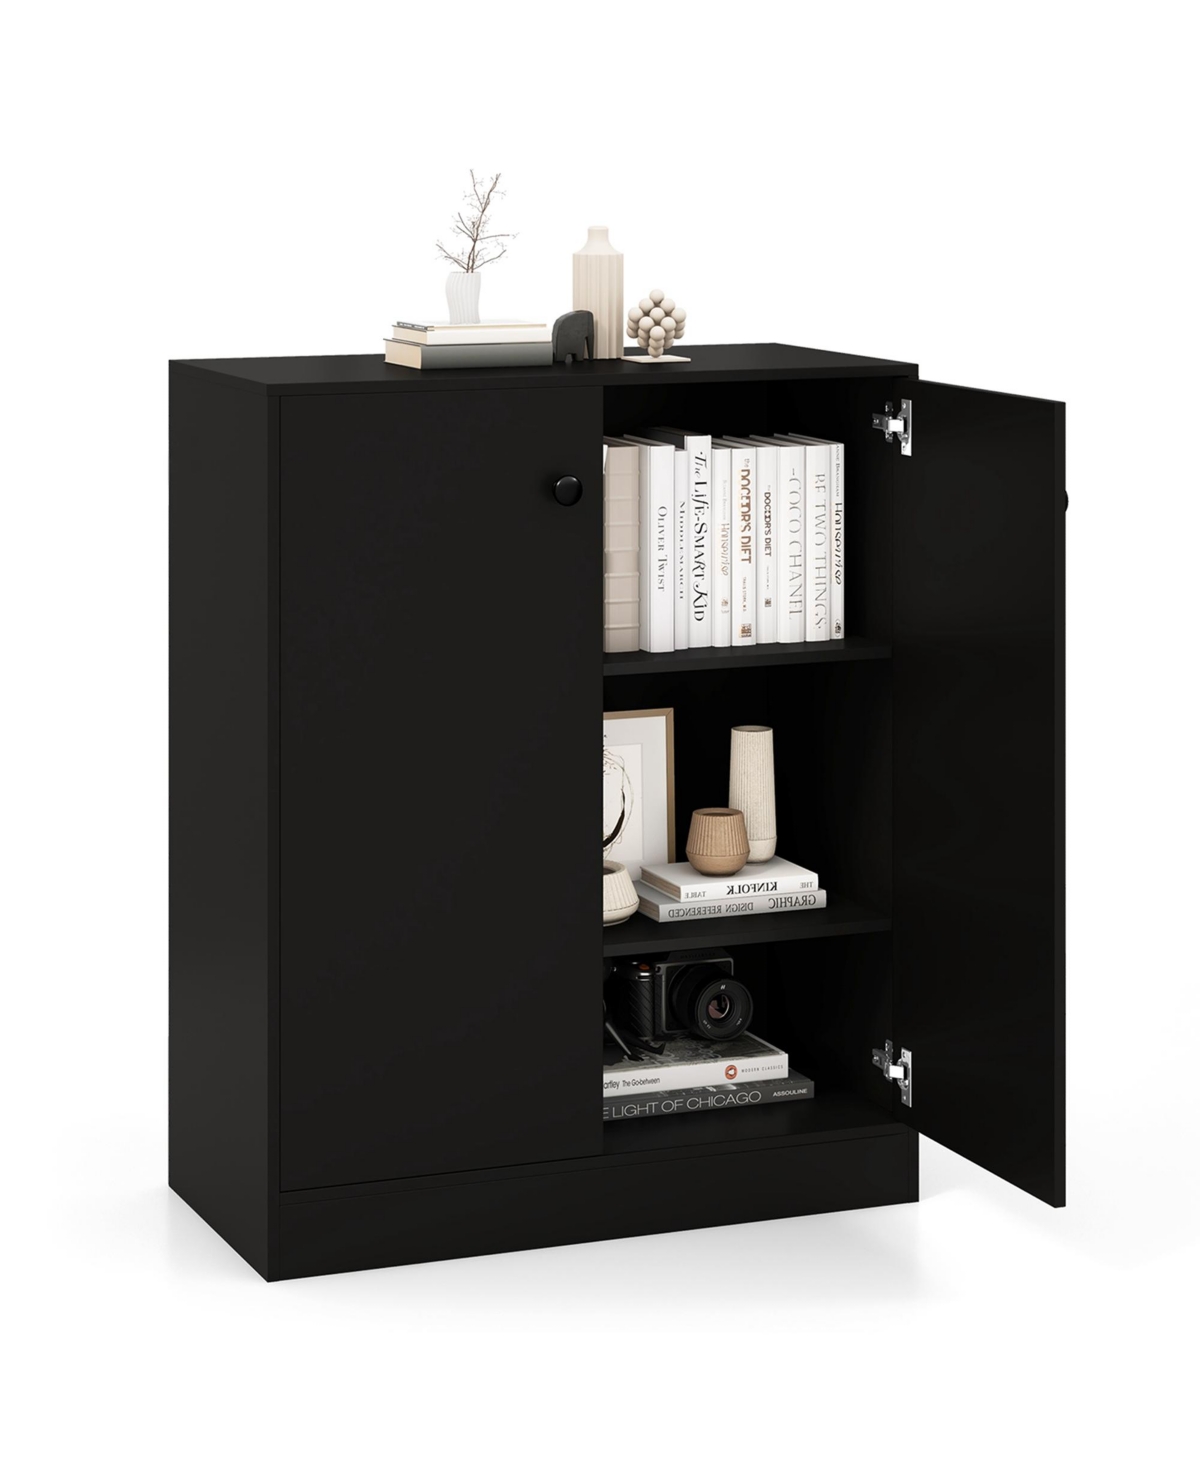 2-Door Storage Cabinet Freestanding Storage Organizer with 3-Tier Shelf Entryway - Black